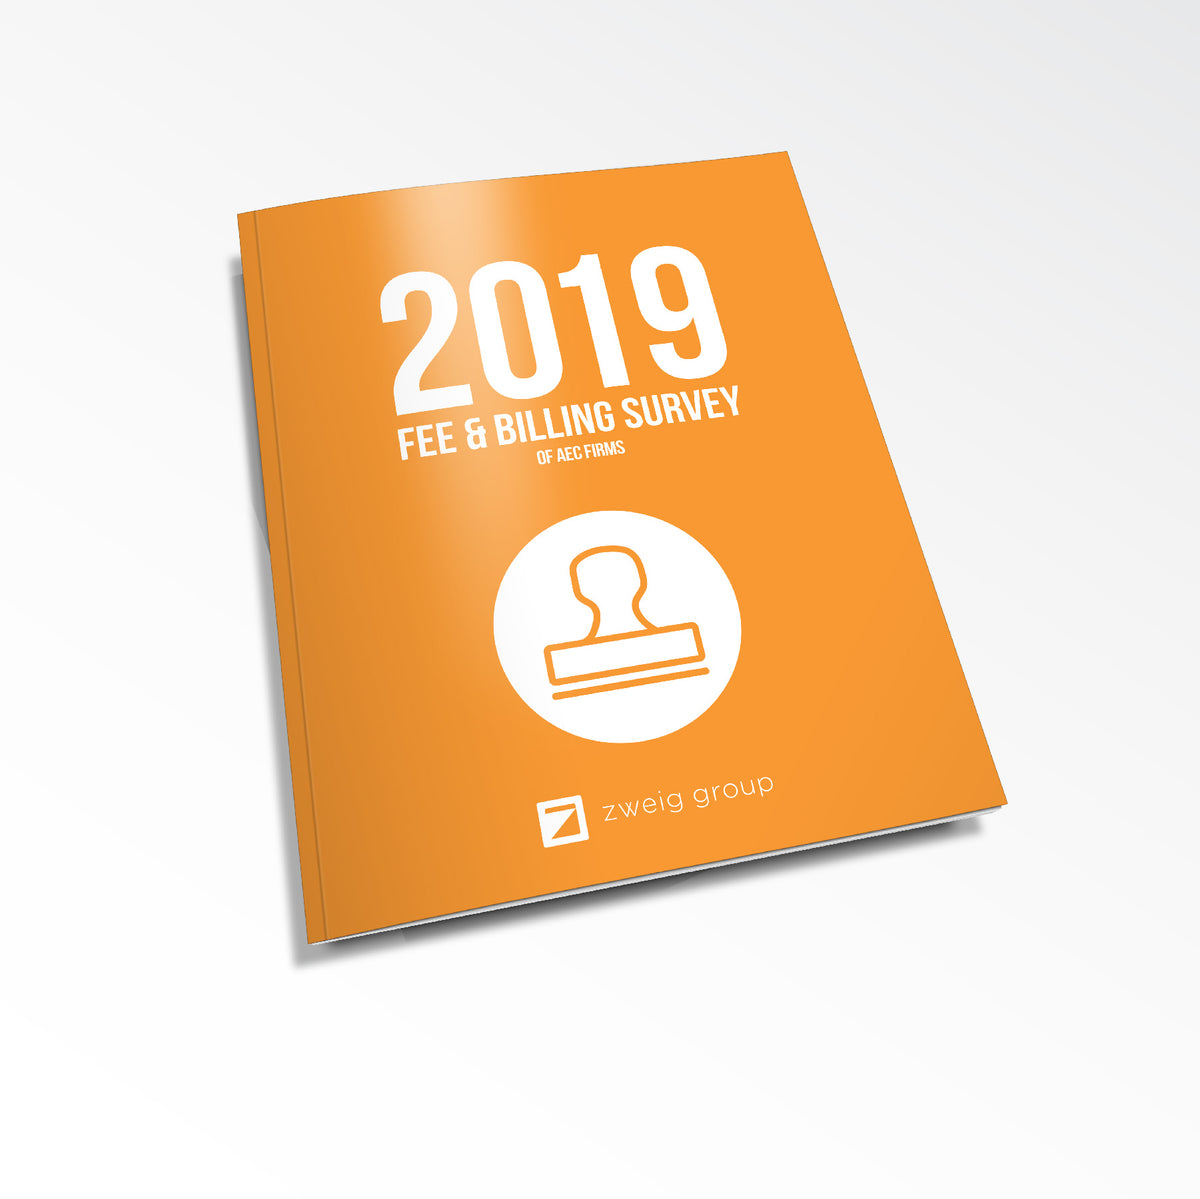 2019 Fee & Billing Survey Cover